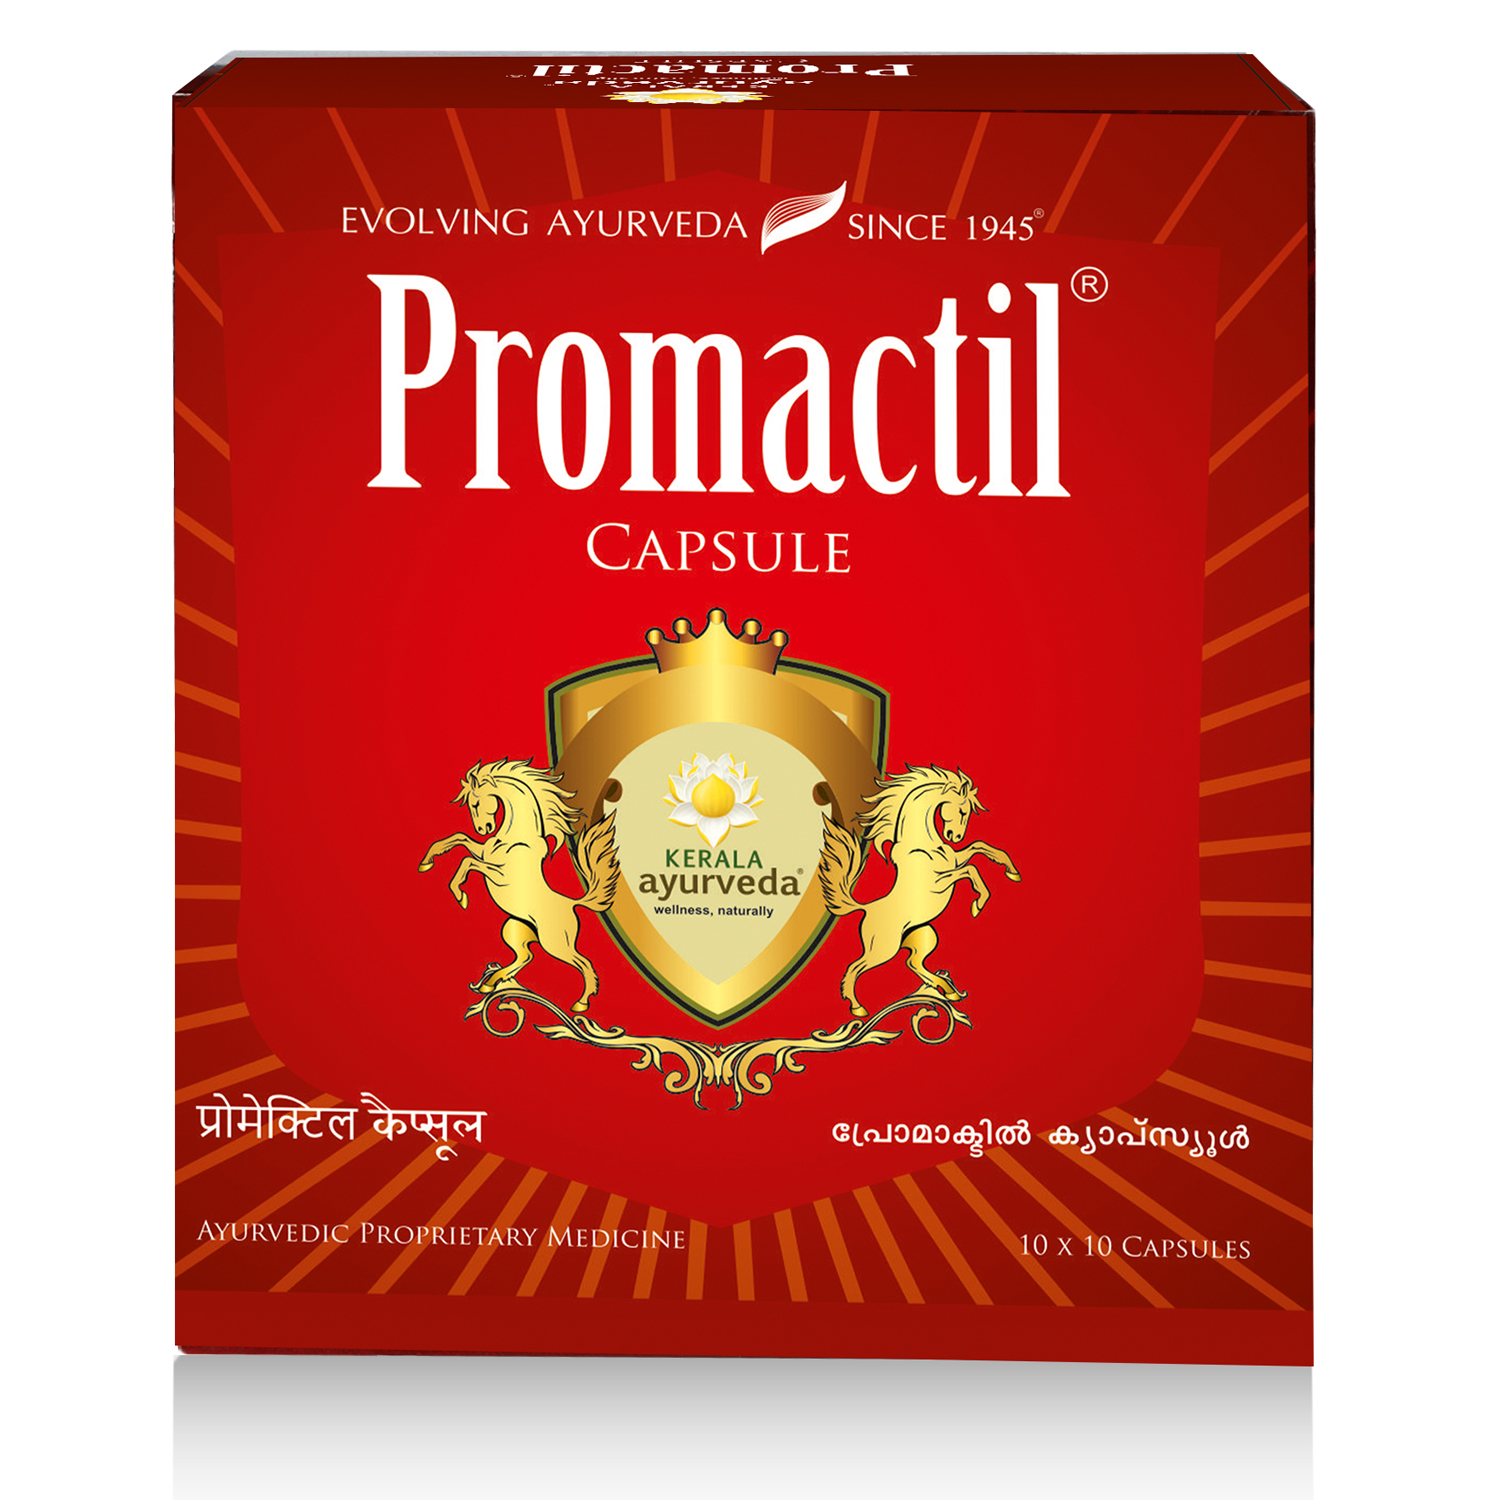 Promactil capsule